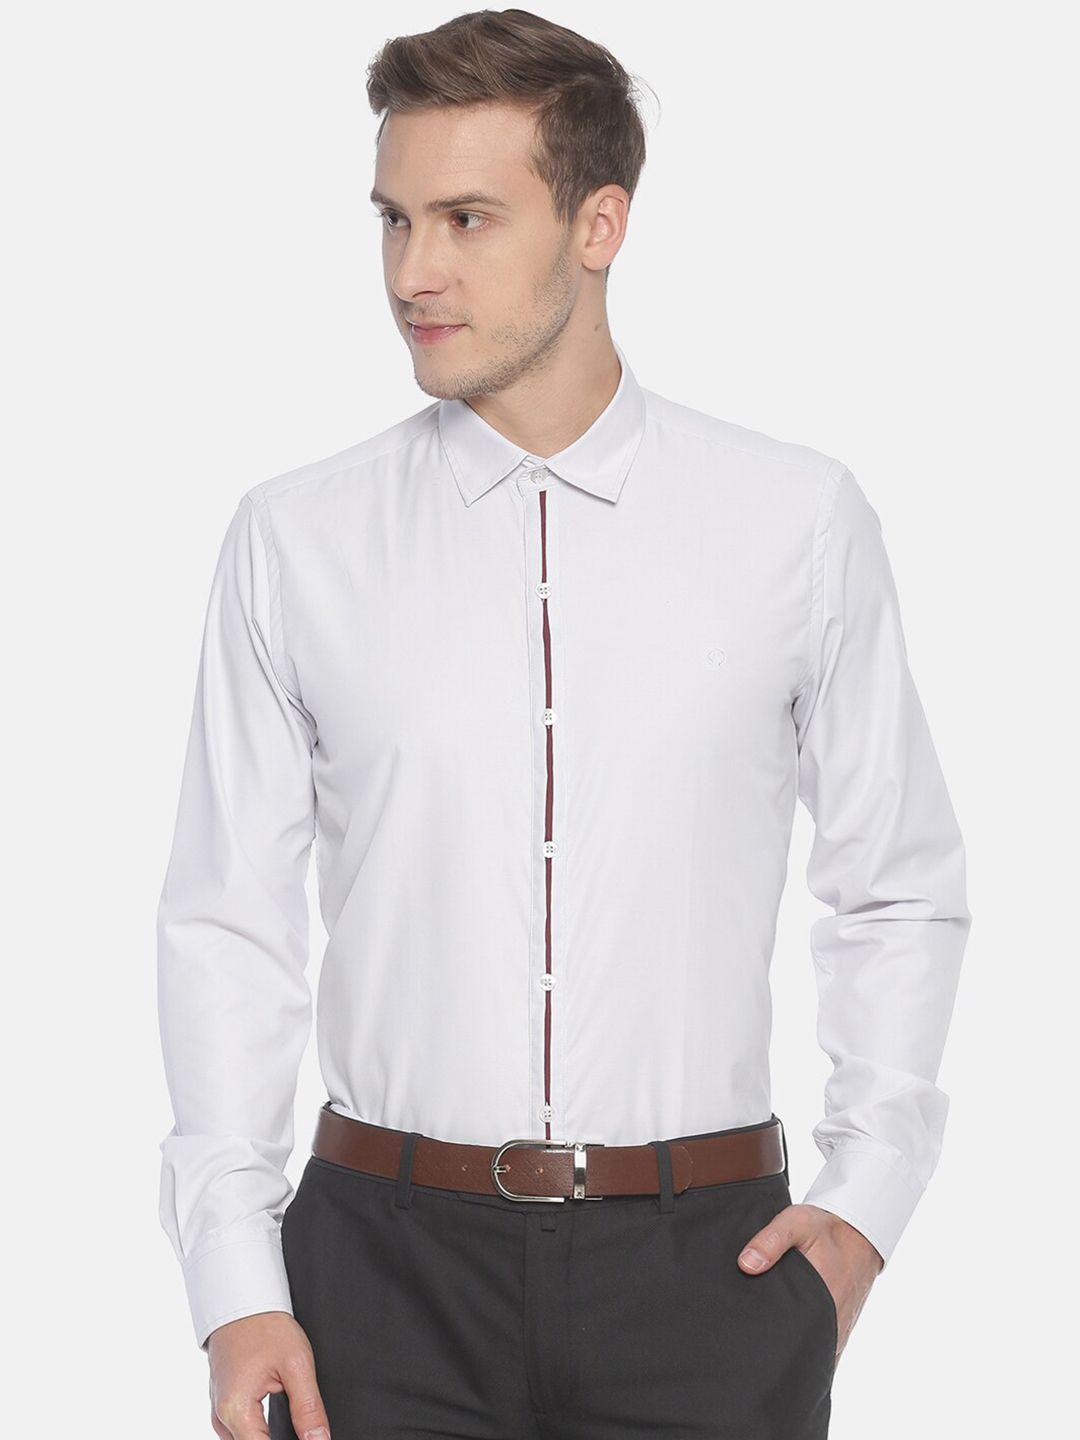 couper & coll men white premium slim fit striped formal shirt